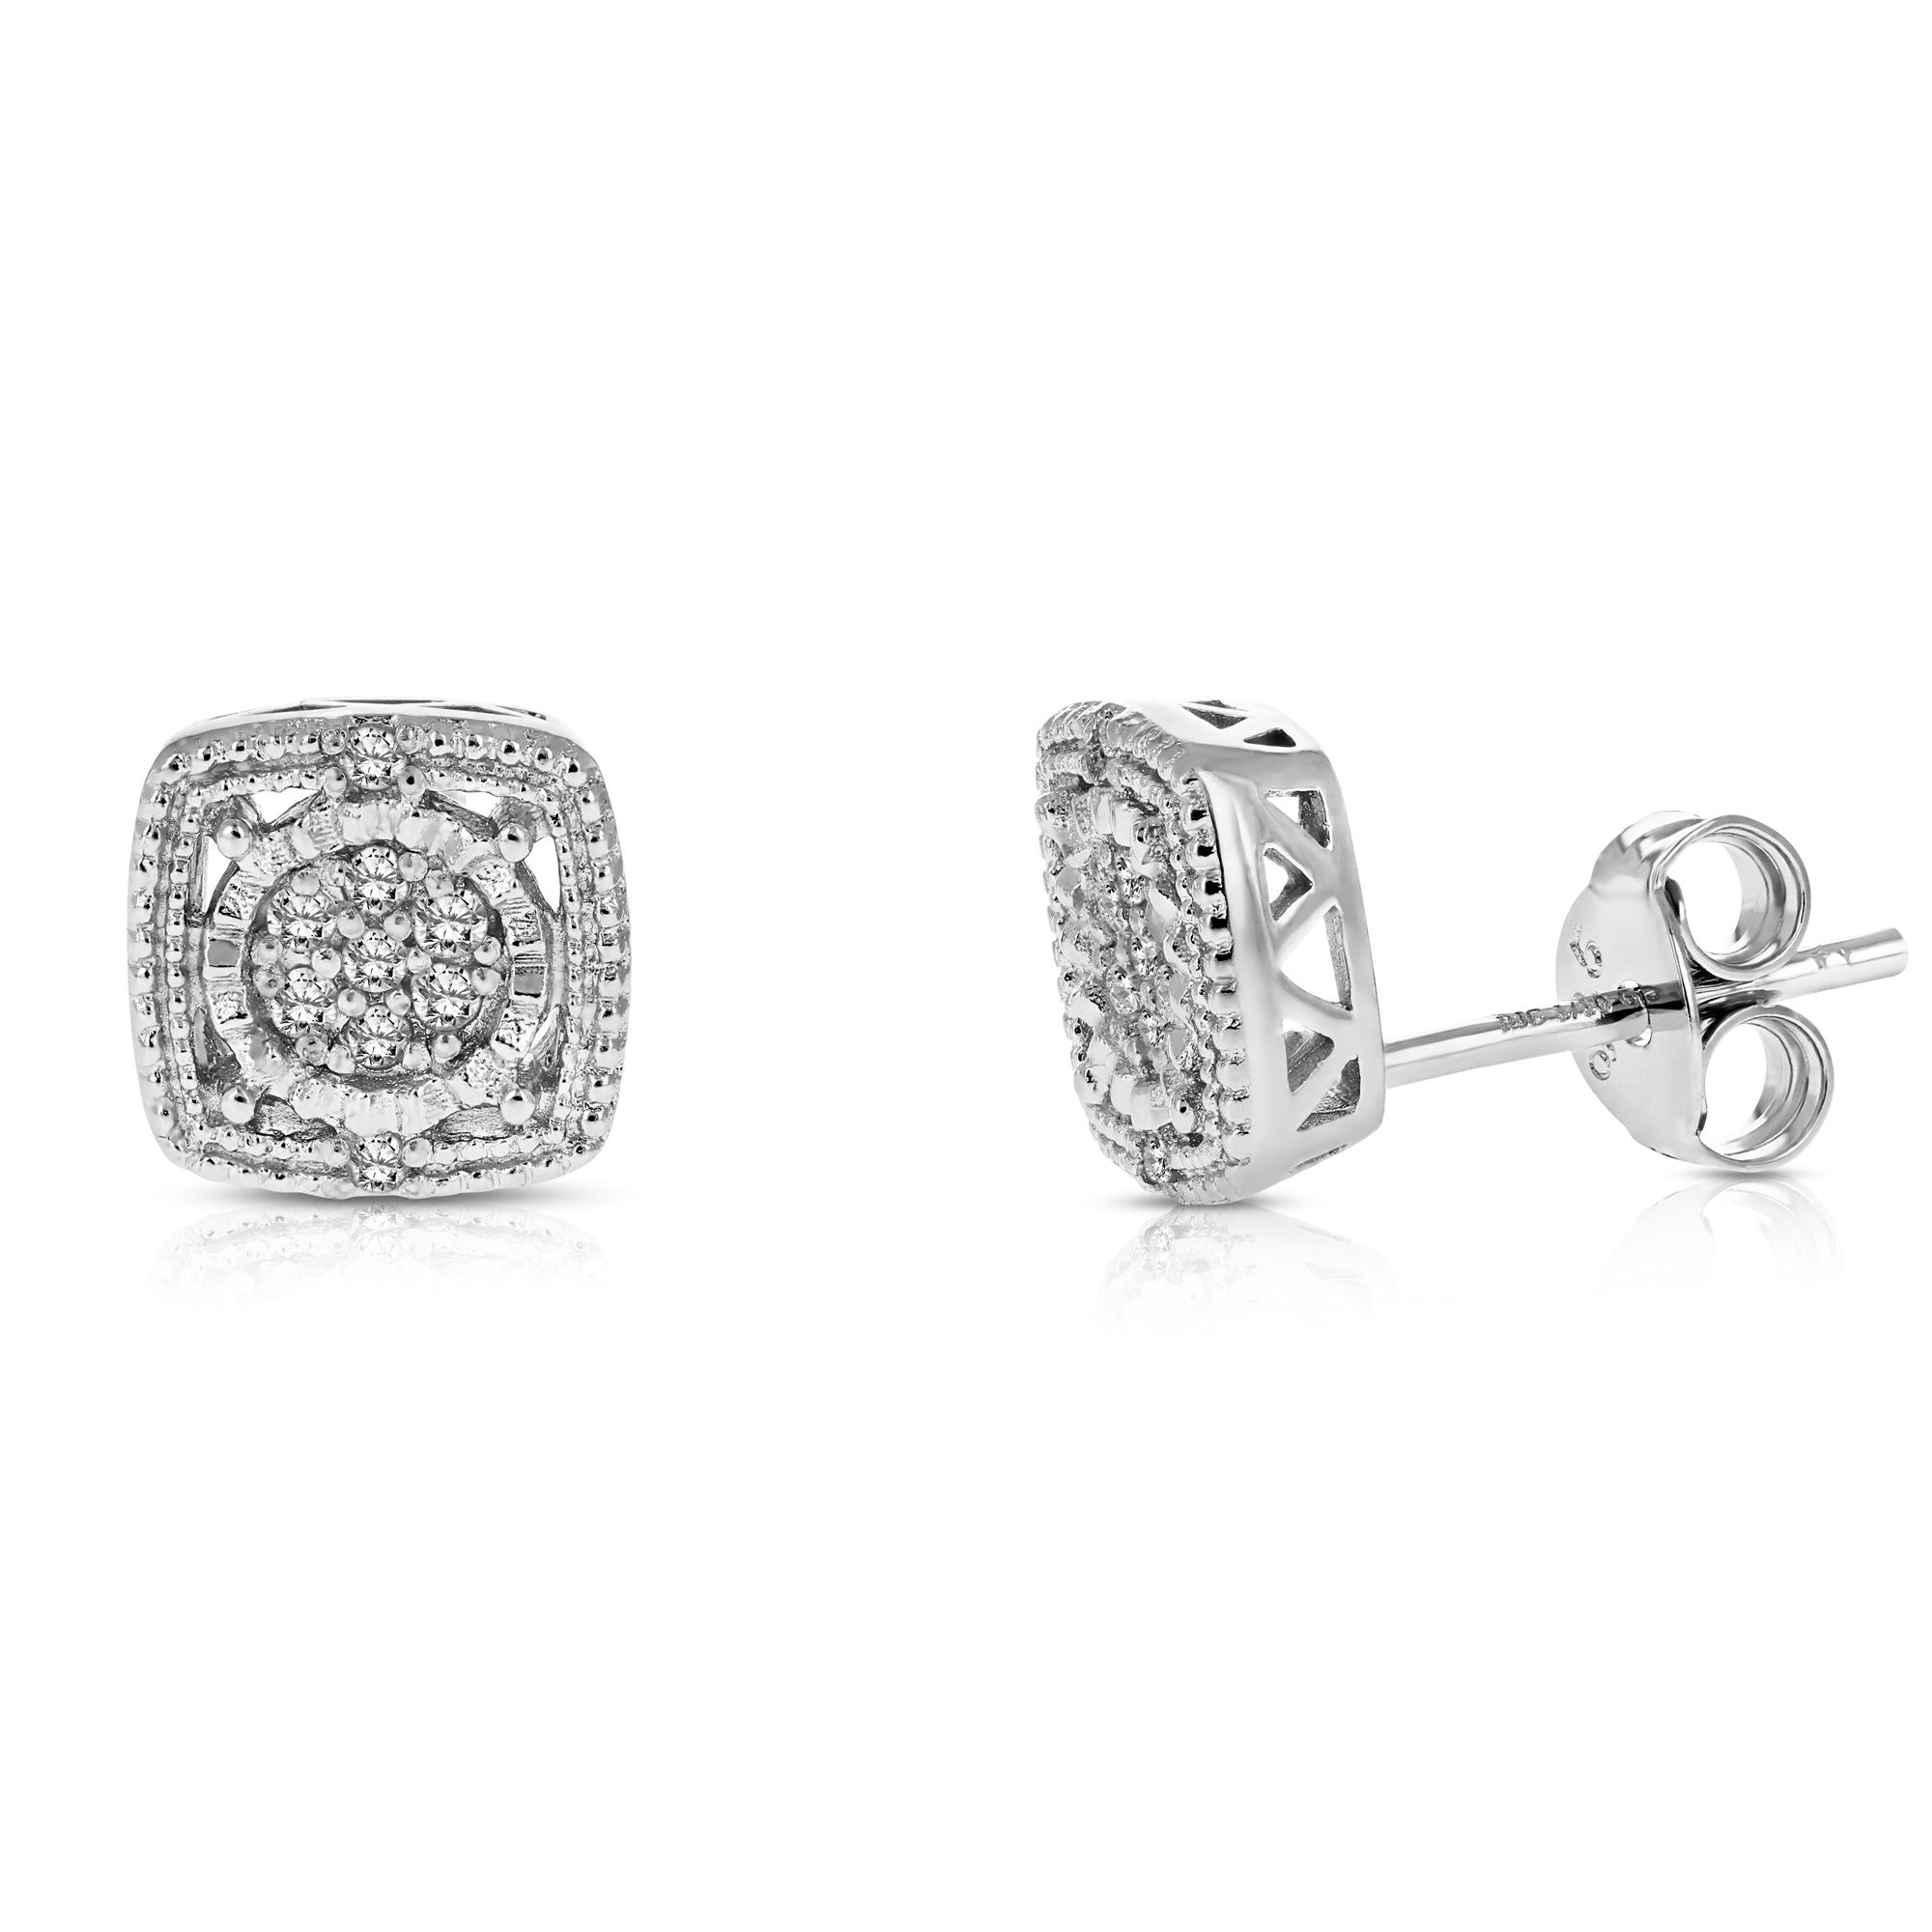 1/10 cttw Diamond Earrings in .925 Sterling Silver Push Backs Square Shape